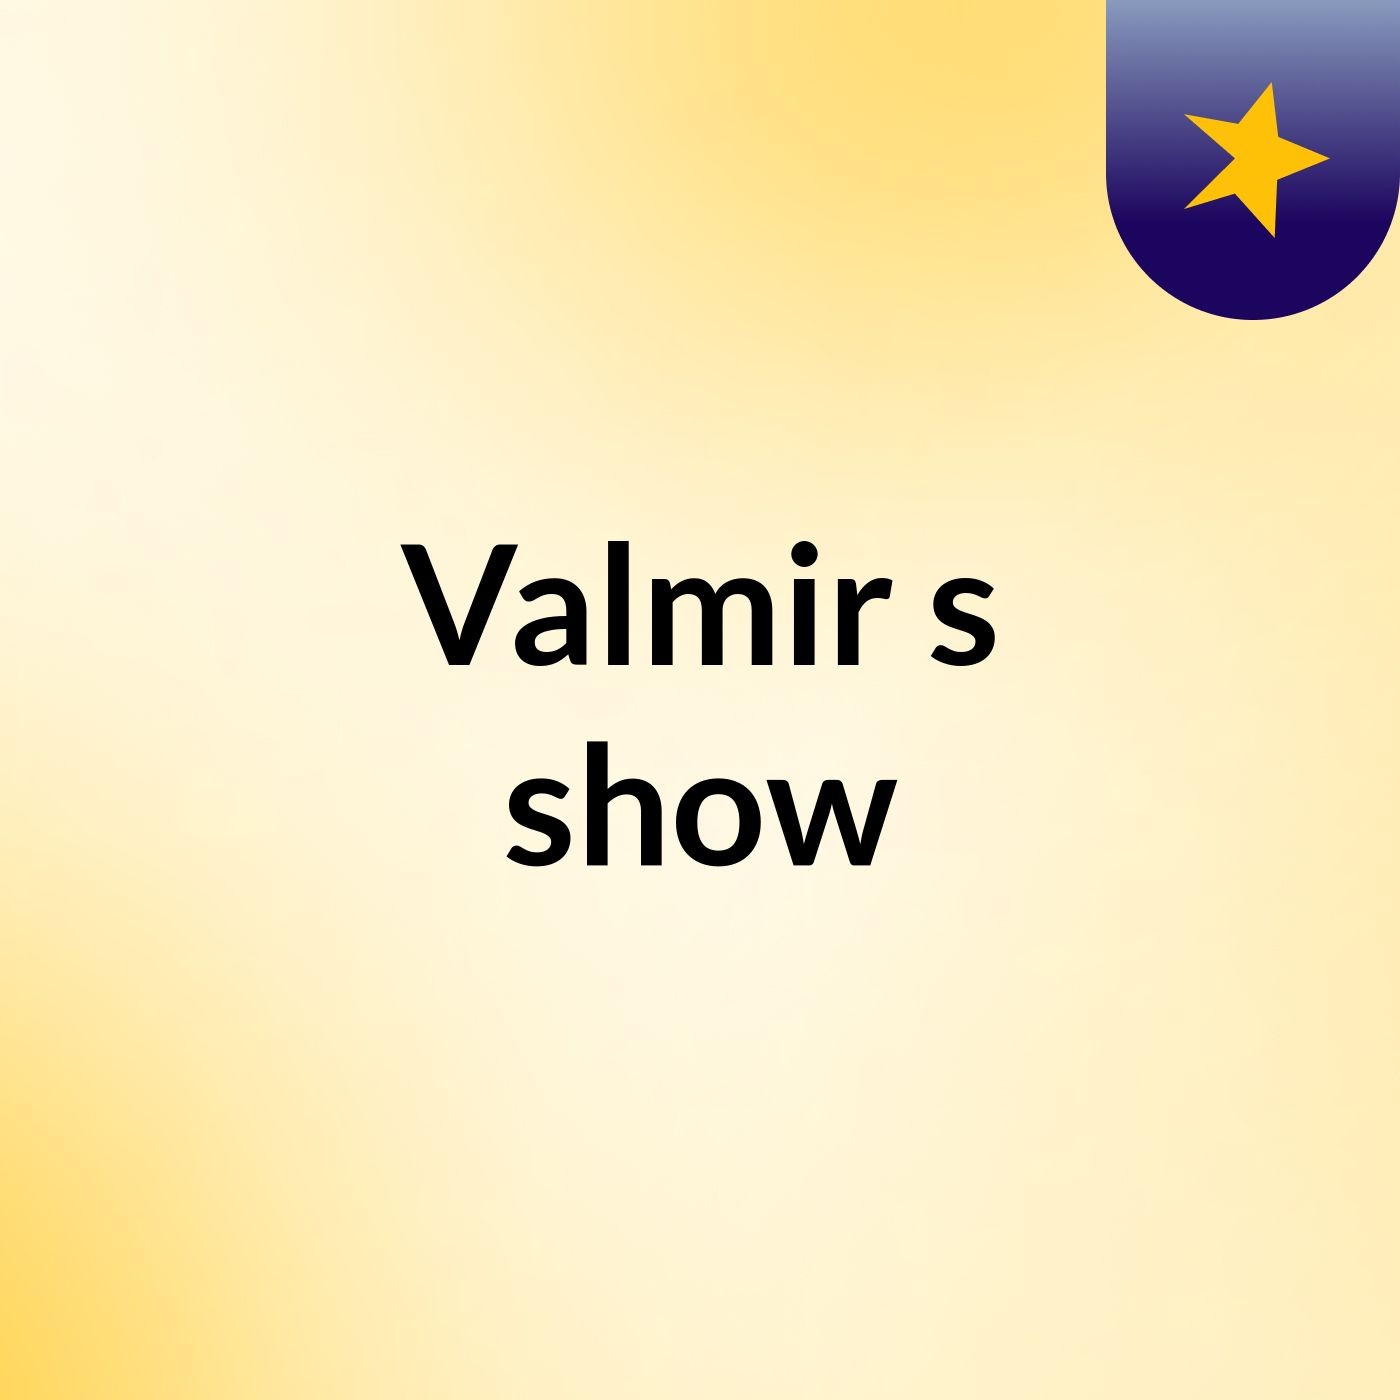 Valmir's show